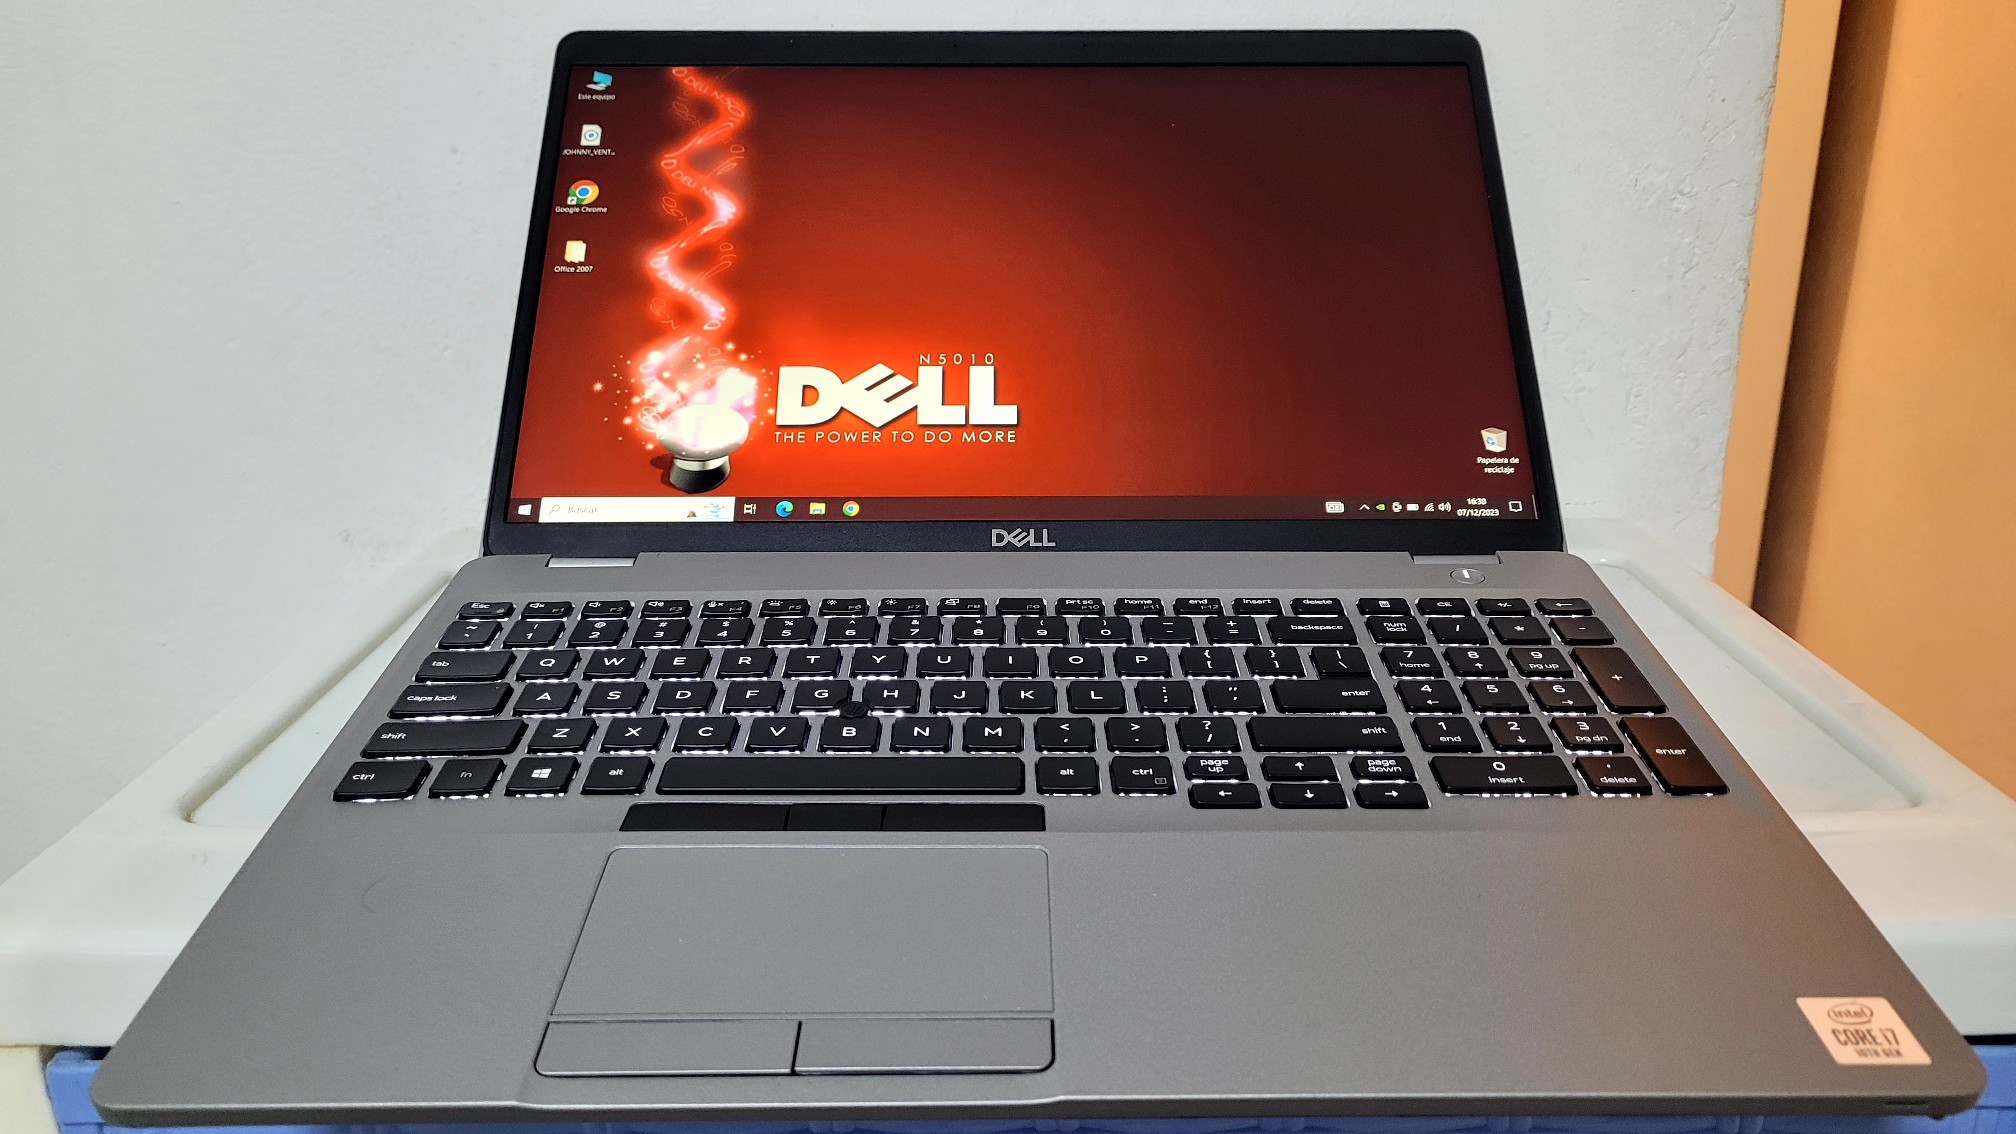 computadoras y laptops - Dell Precision 17 Pulg Core i7 10th Gen Ram 16gb ddr4 Nvidea p520 2gb Dedicada 0